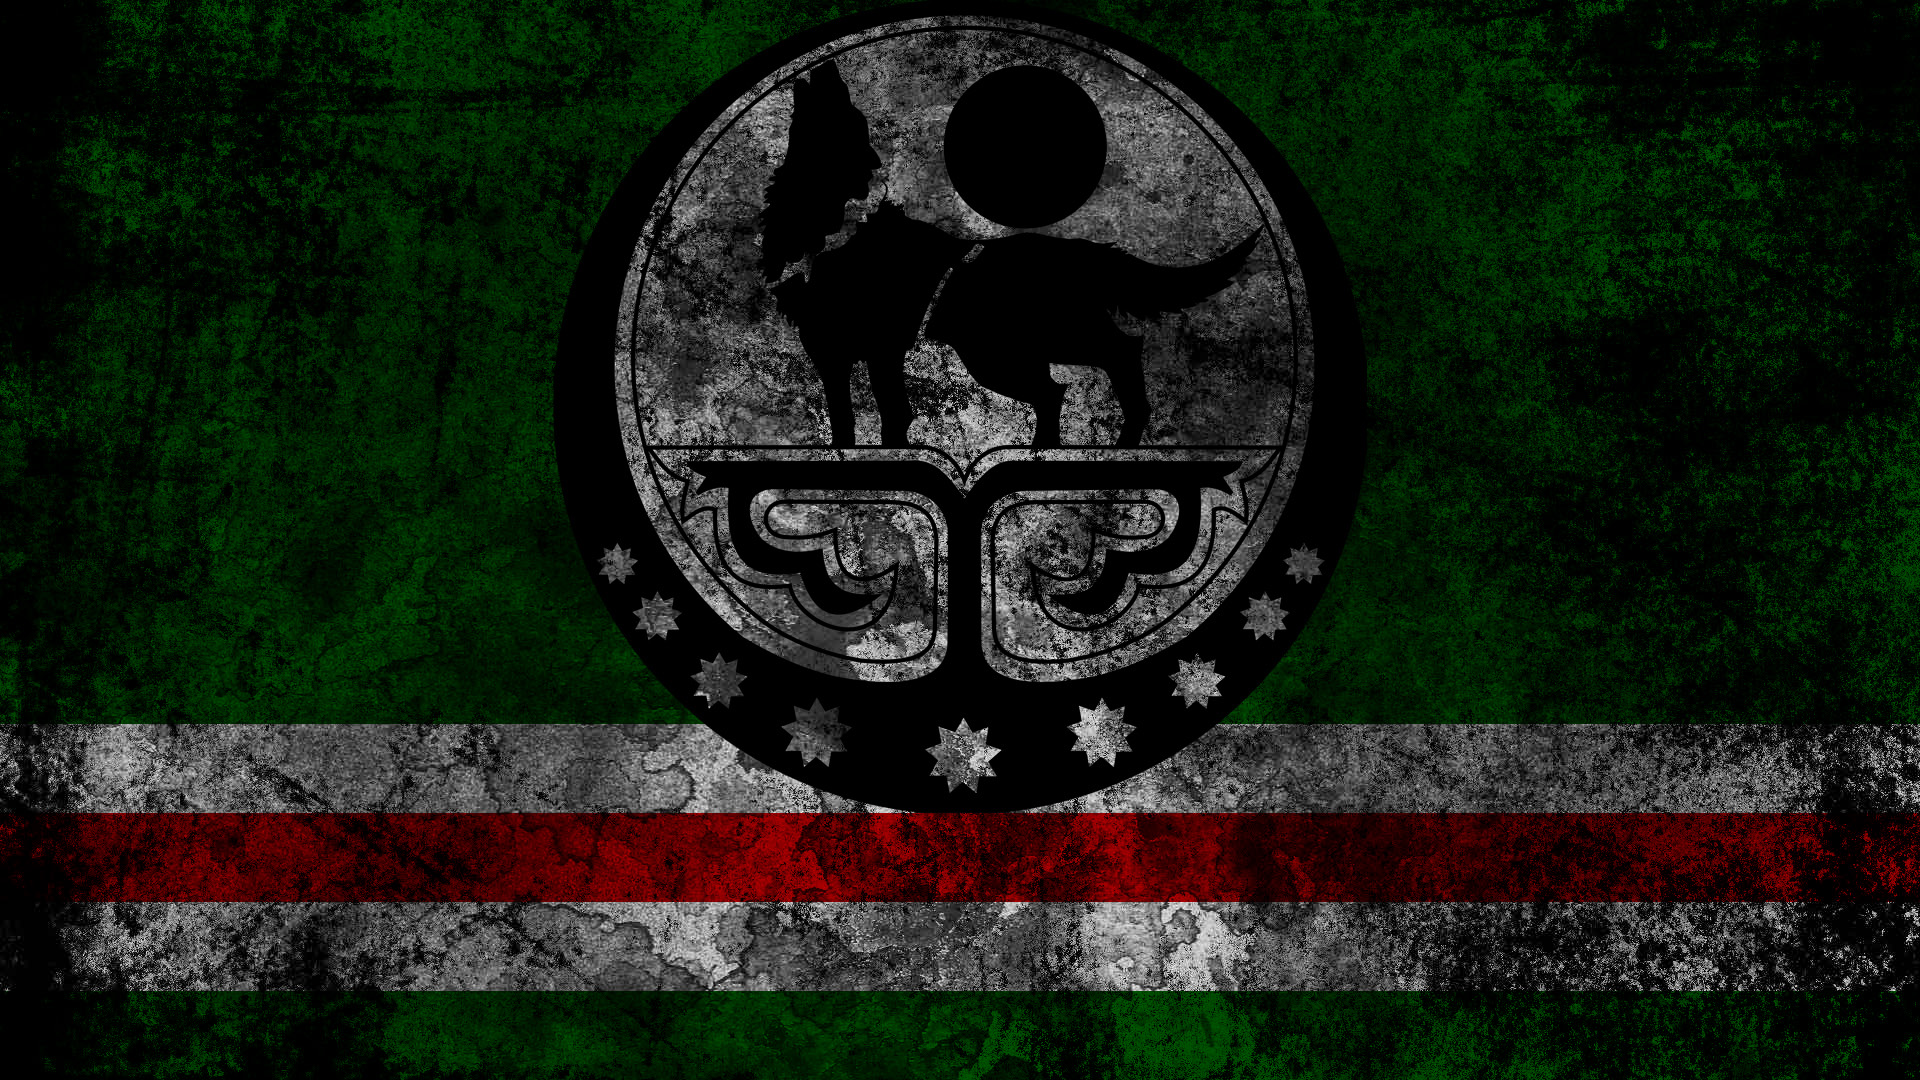 743558 descargar imagen miscelaneo, bandera de chechenia: fondos de pantalla y protectores de pantalla gratis